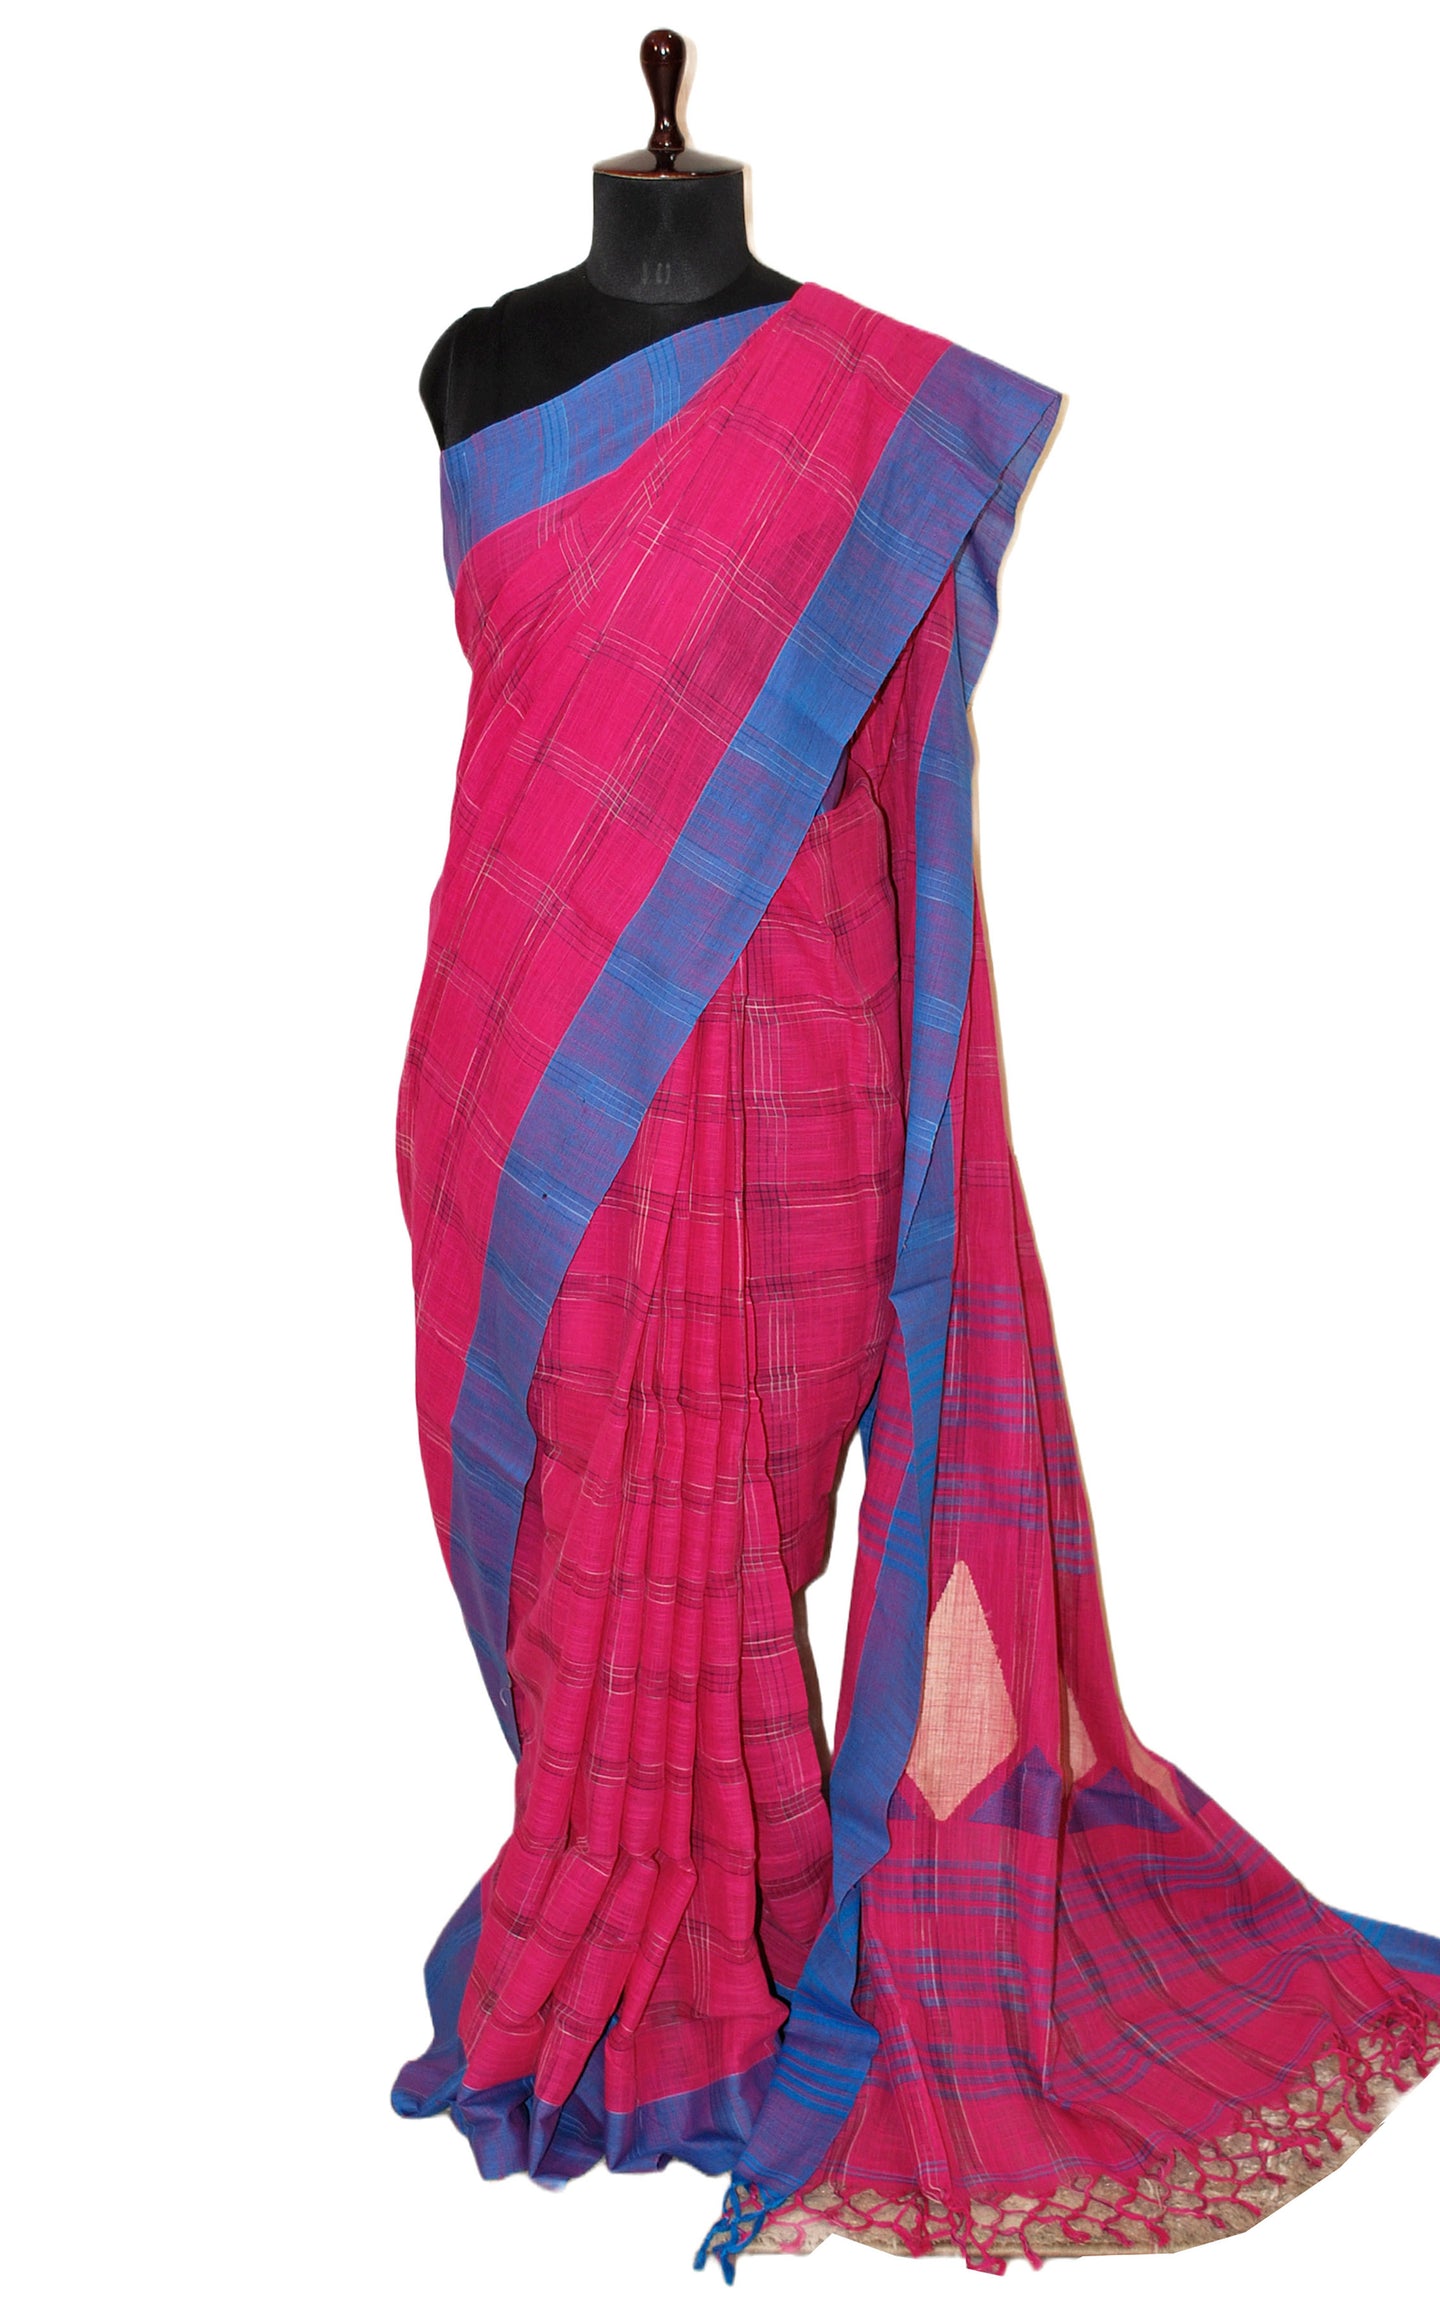 Woven Kotki Checks Soft Cotton Saree in Hot Pink and Royal Blue